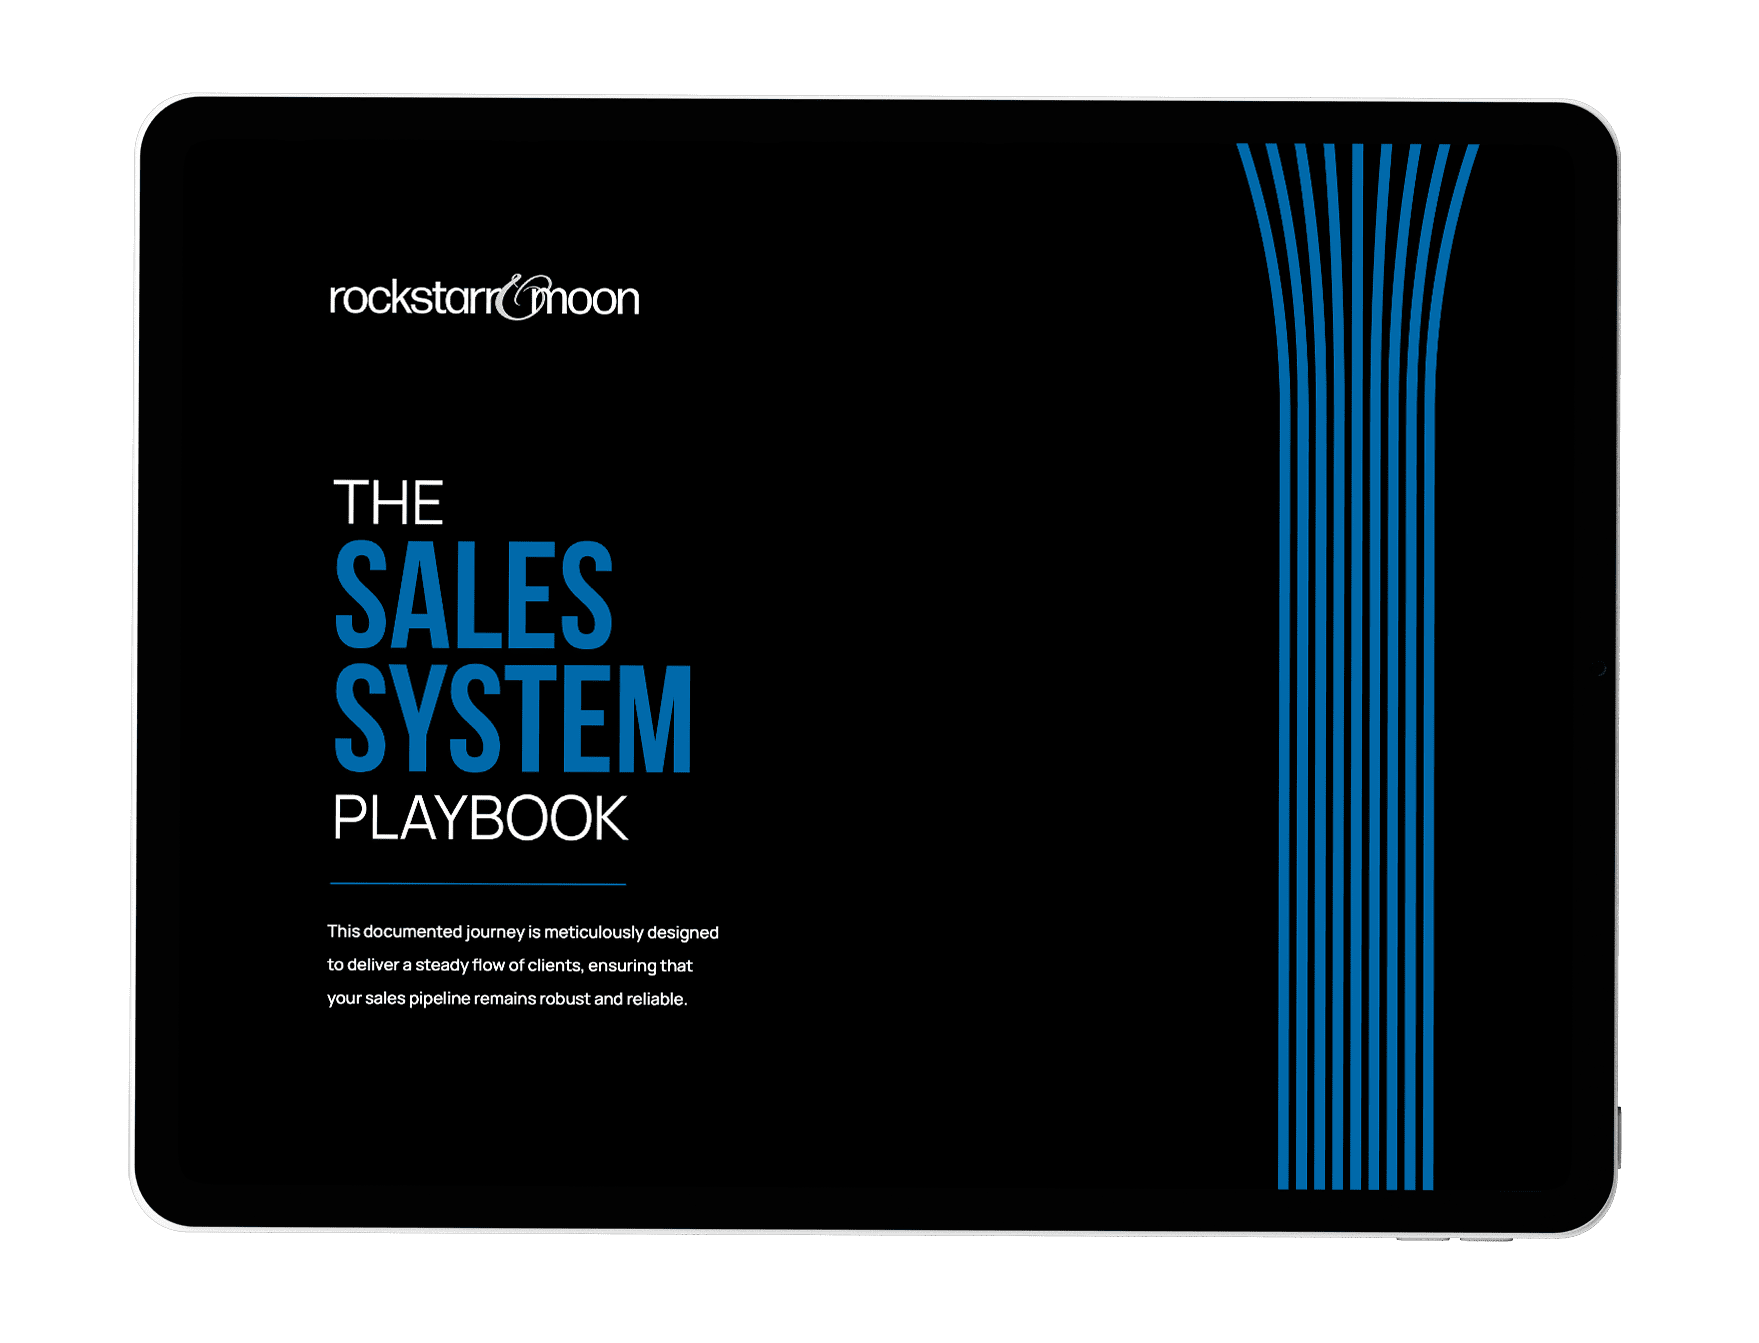 Rockstarr & Moon's Sales System Playbook